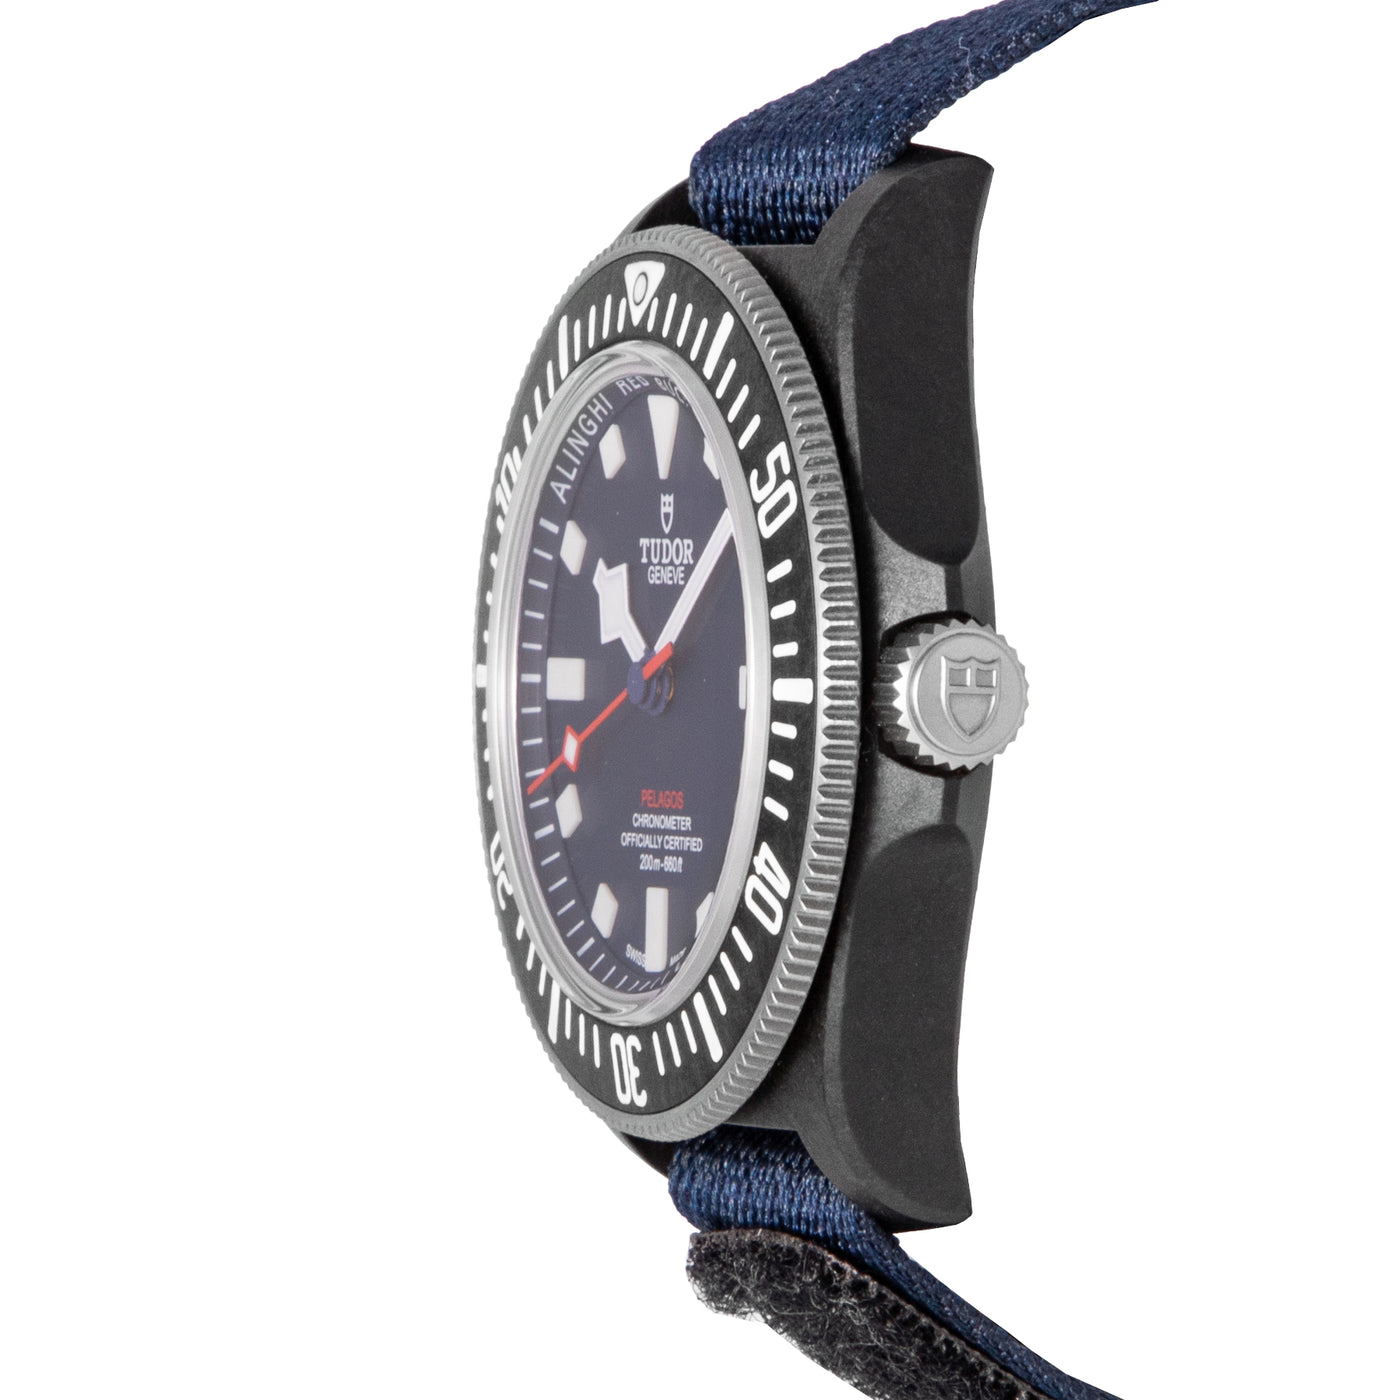 Tudor Pelagos FXD Alinghi Red Bull Racing 25707KN | Timepiece360